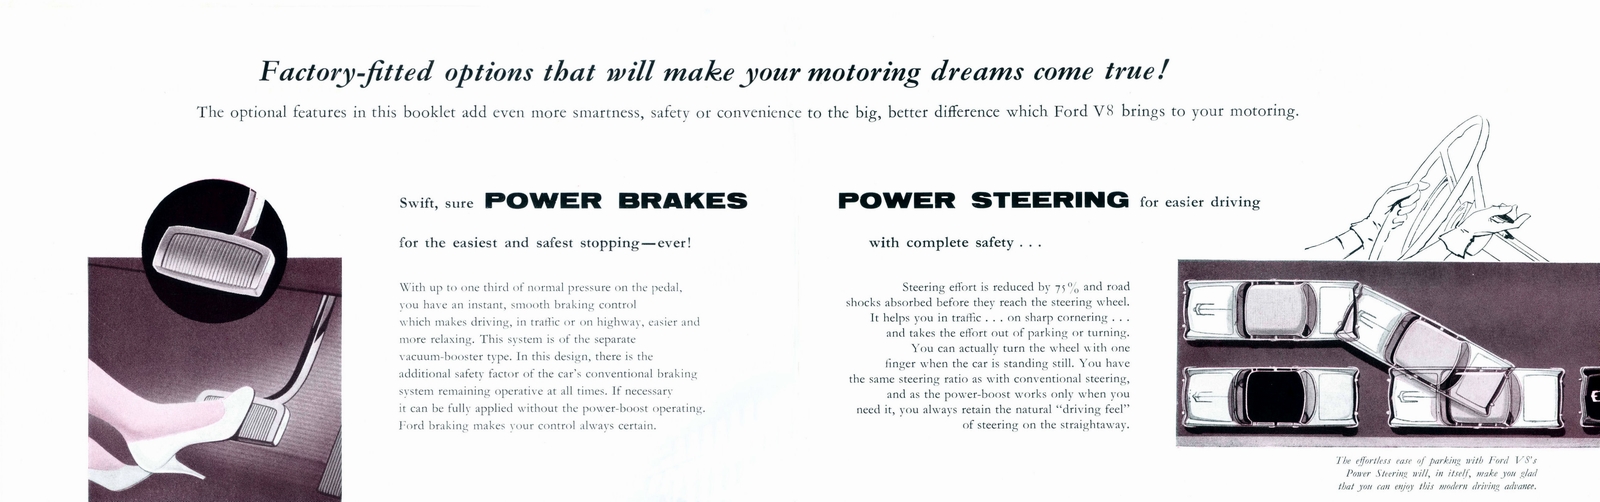 n_1958 Ford Options (Aus)-02-03.jpg